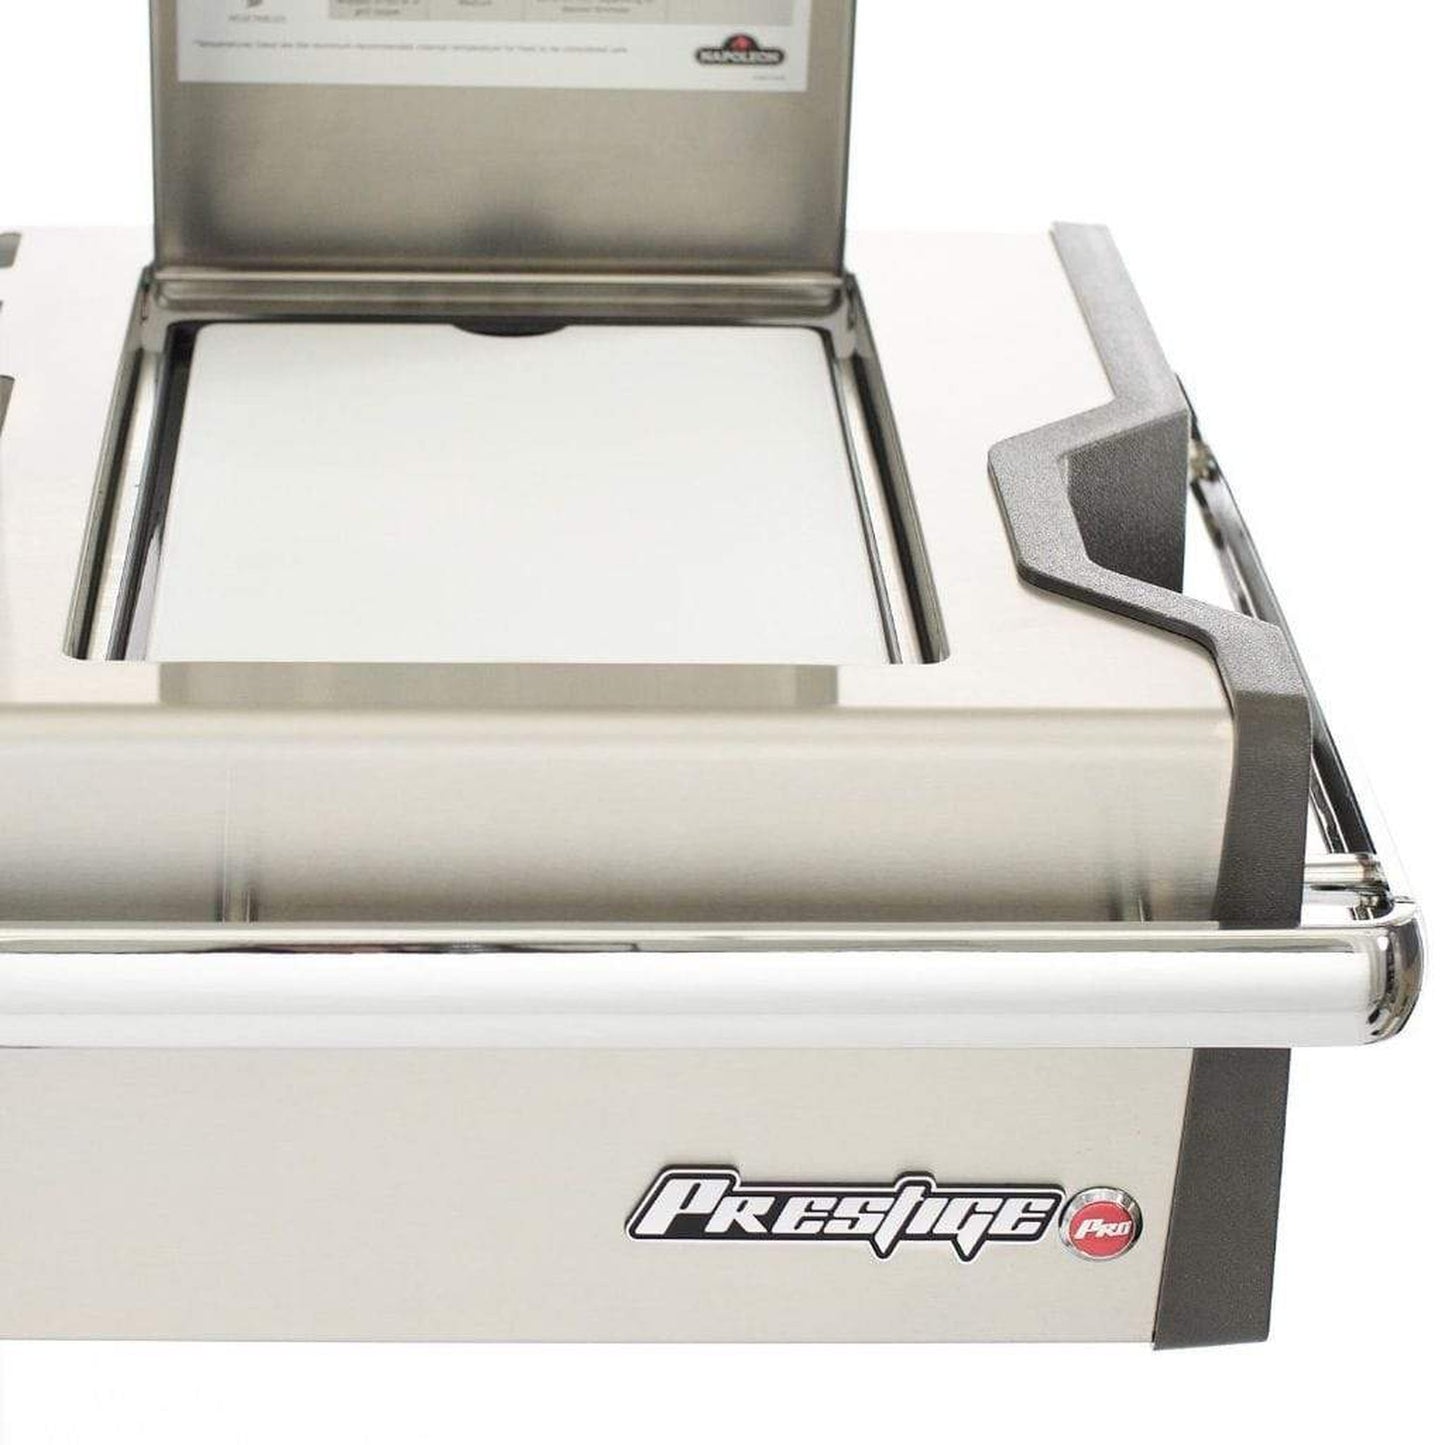 Napoleon 94" Prestige PRO 825 Freestanding Gas Grill with Infrared Rear Burner, Double Infrared Sear Burner & Side Burner